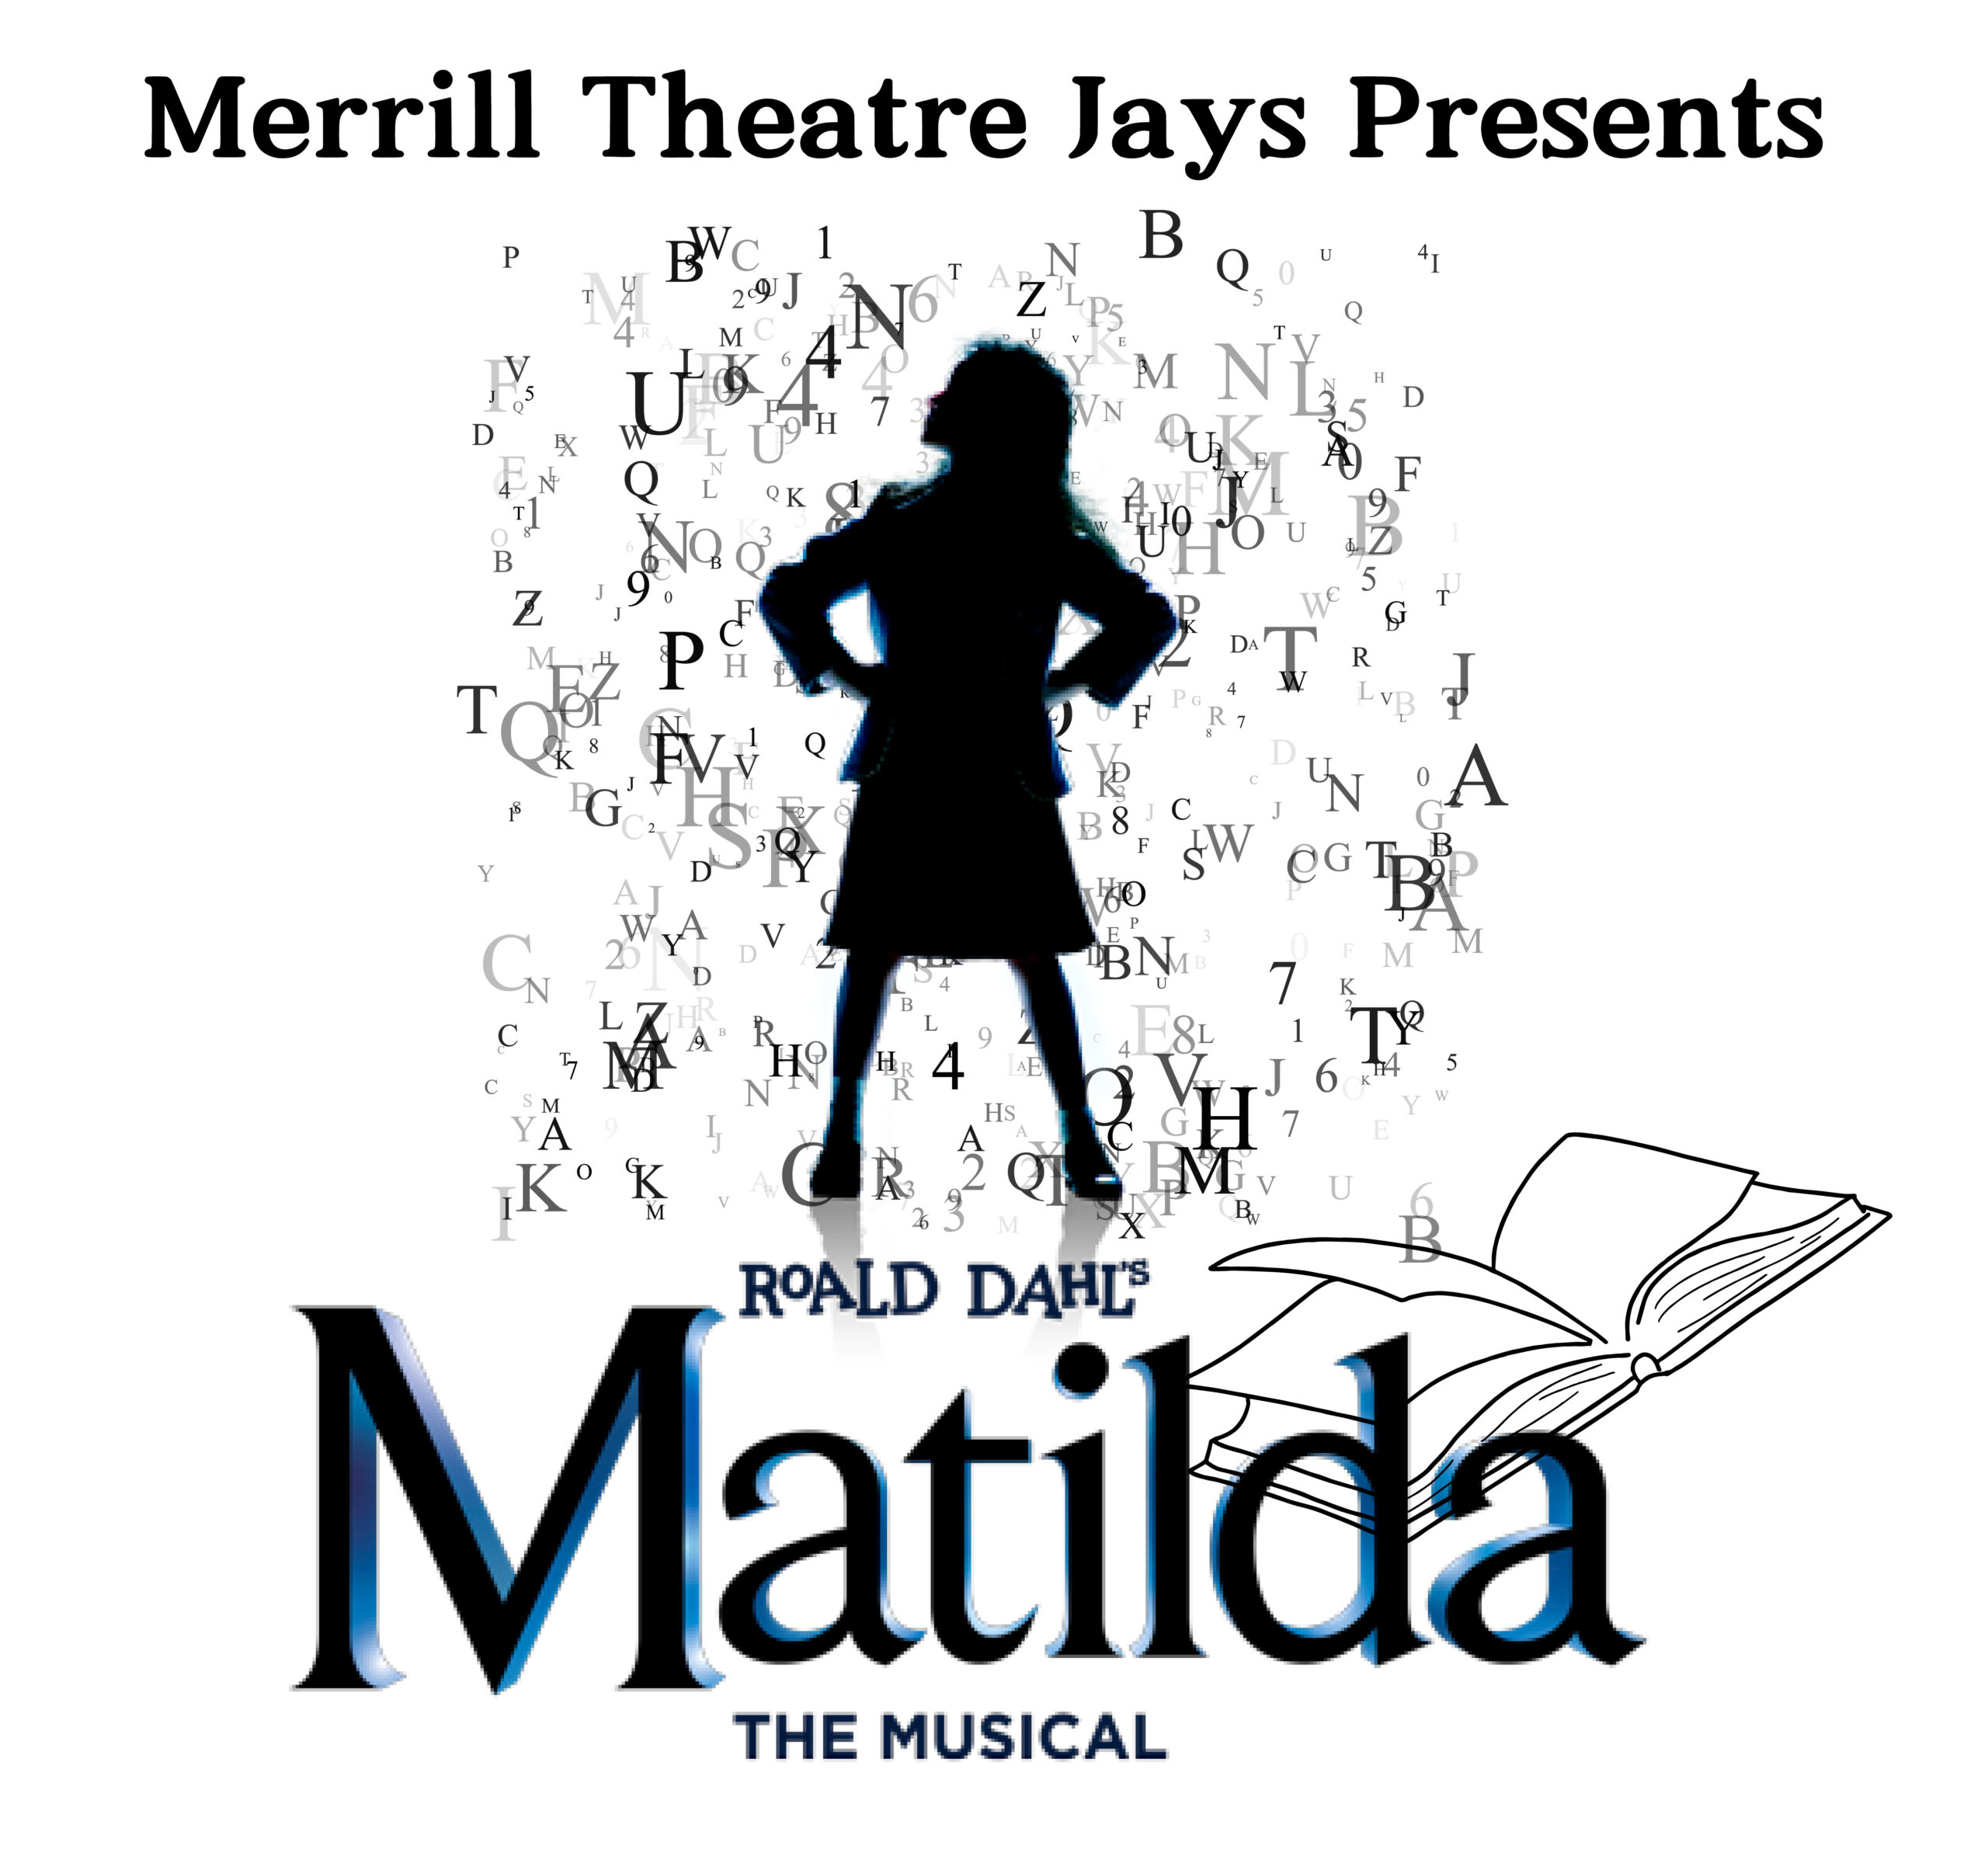 Merrill Theatre Jays: Matilda takes center stage